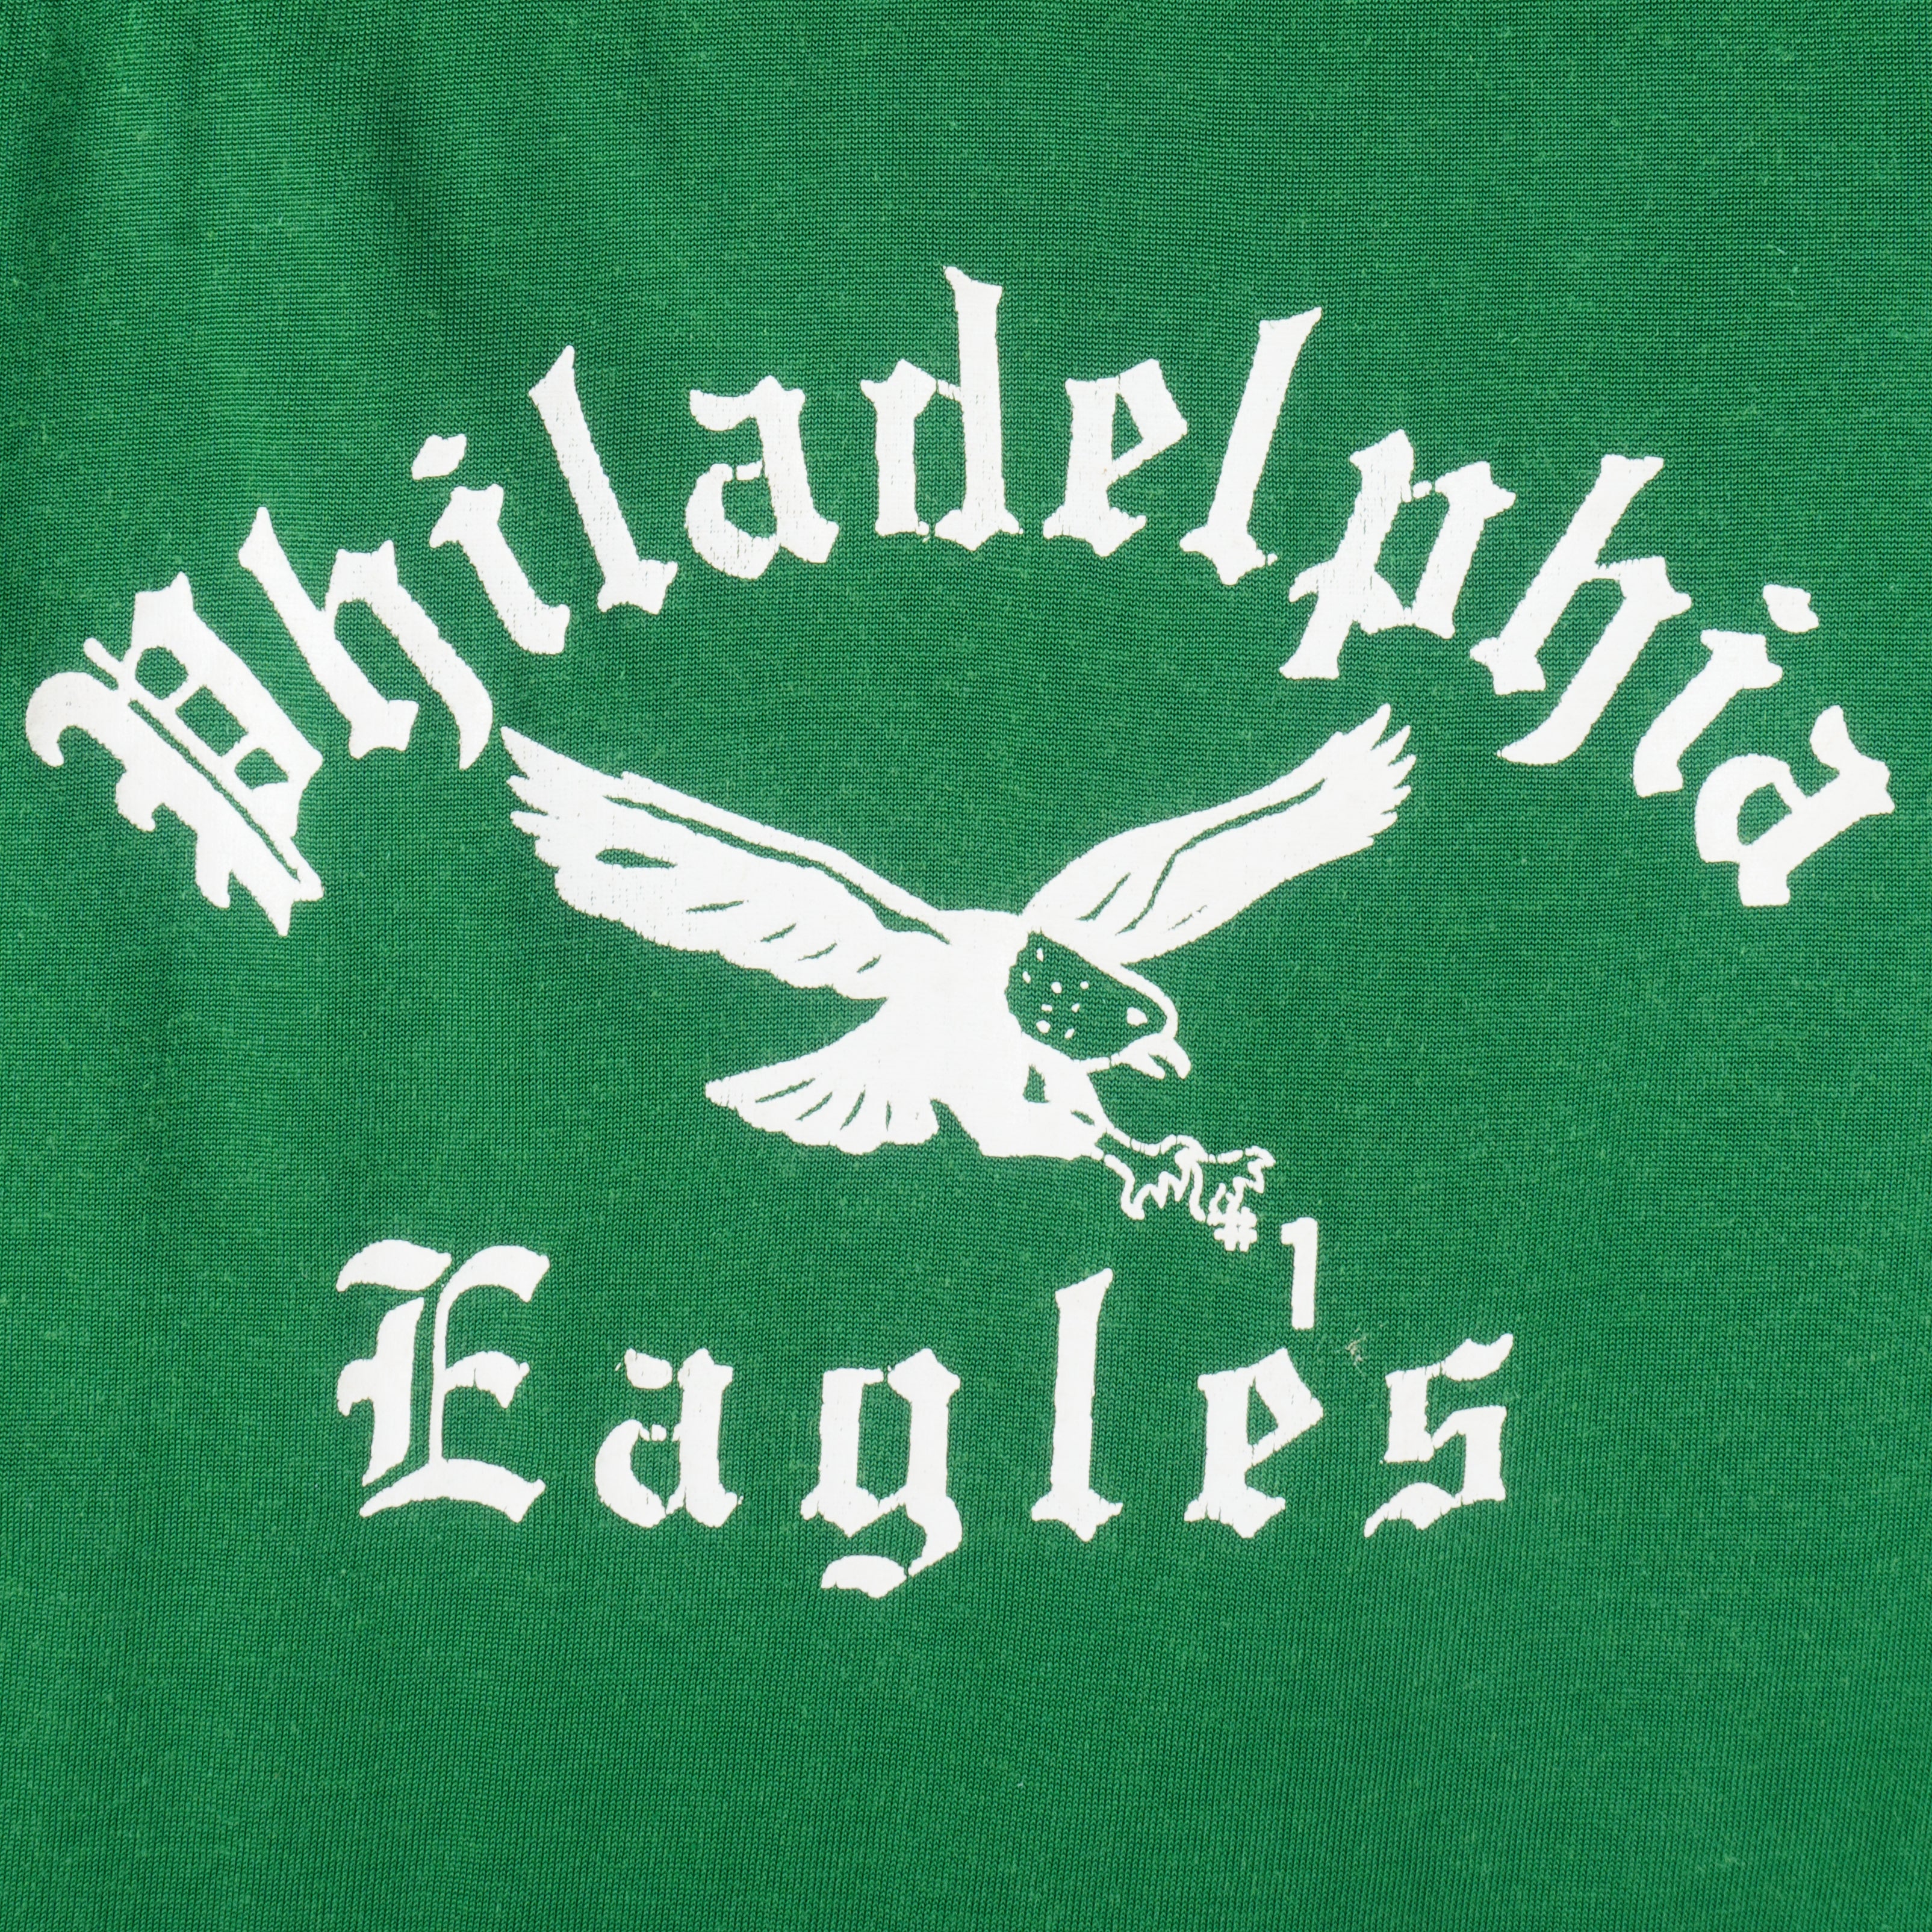 Philadelphia Eagles Vintage Clothing